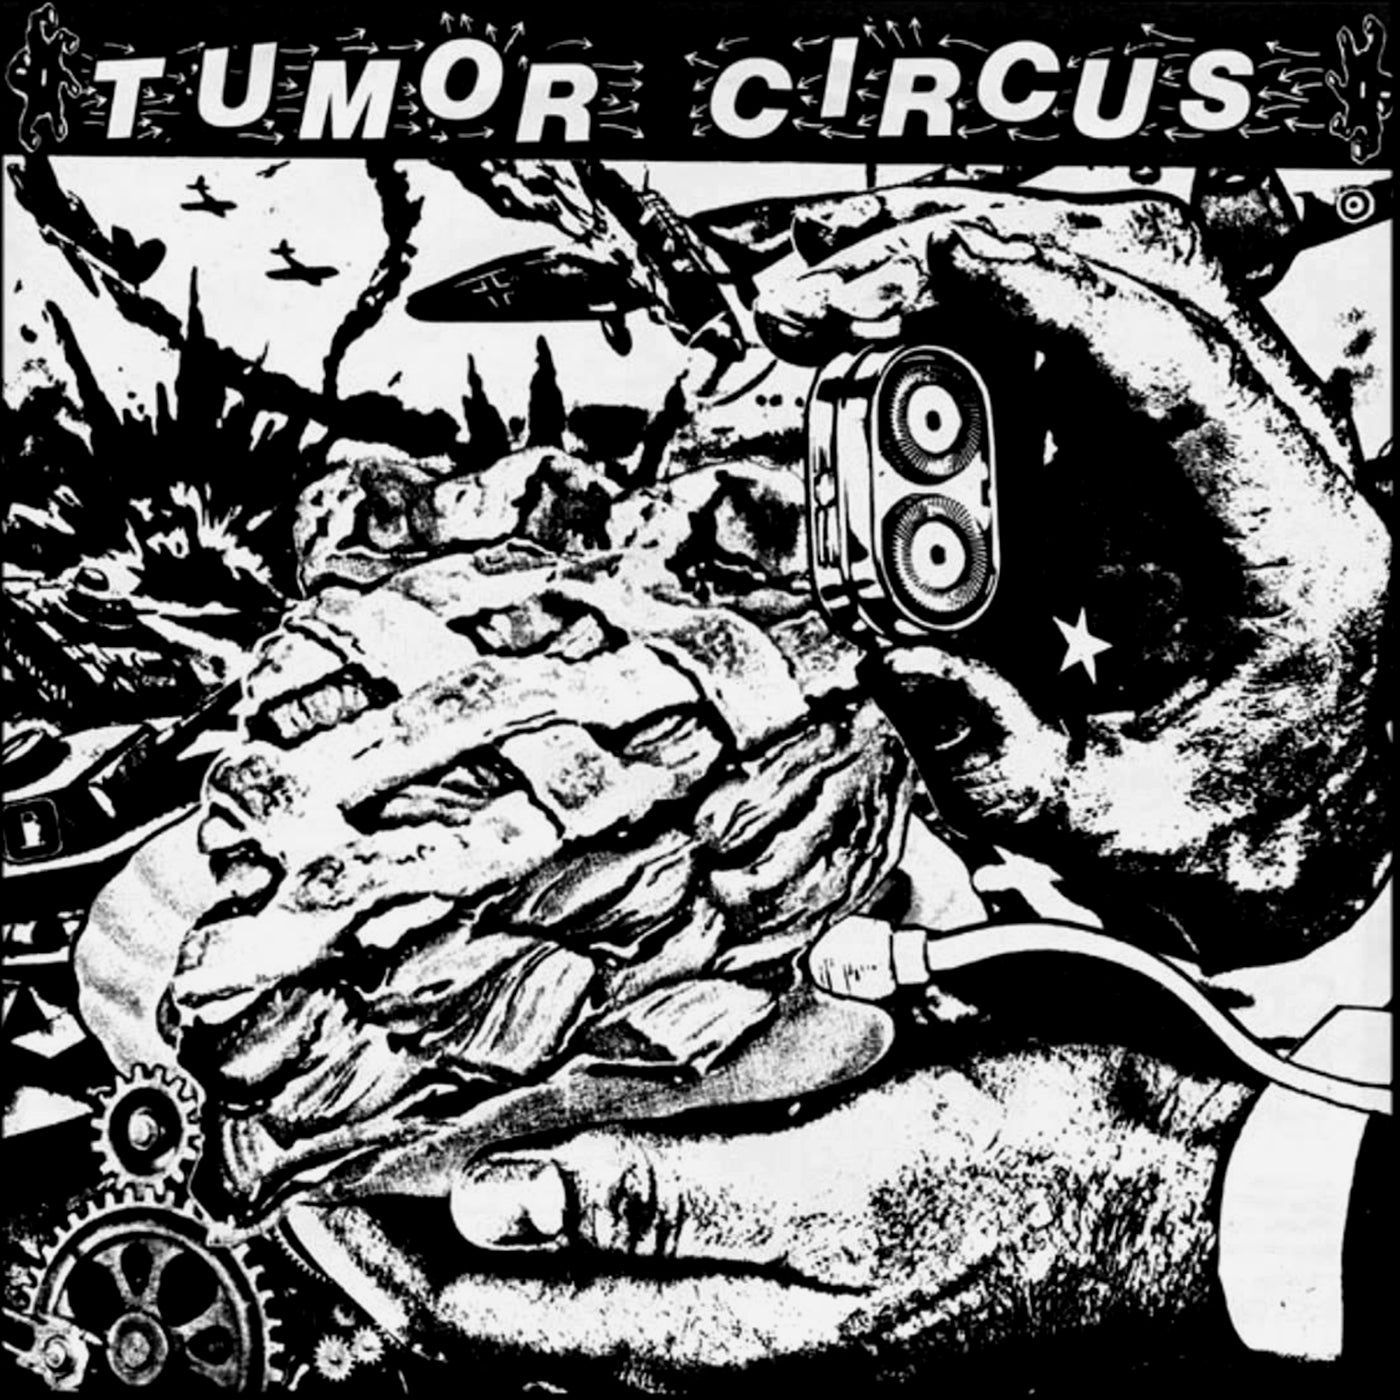 v089 - Tumor Circus - "Take Me Back Or I'll Drown Our Dog"